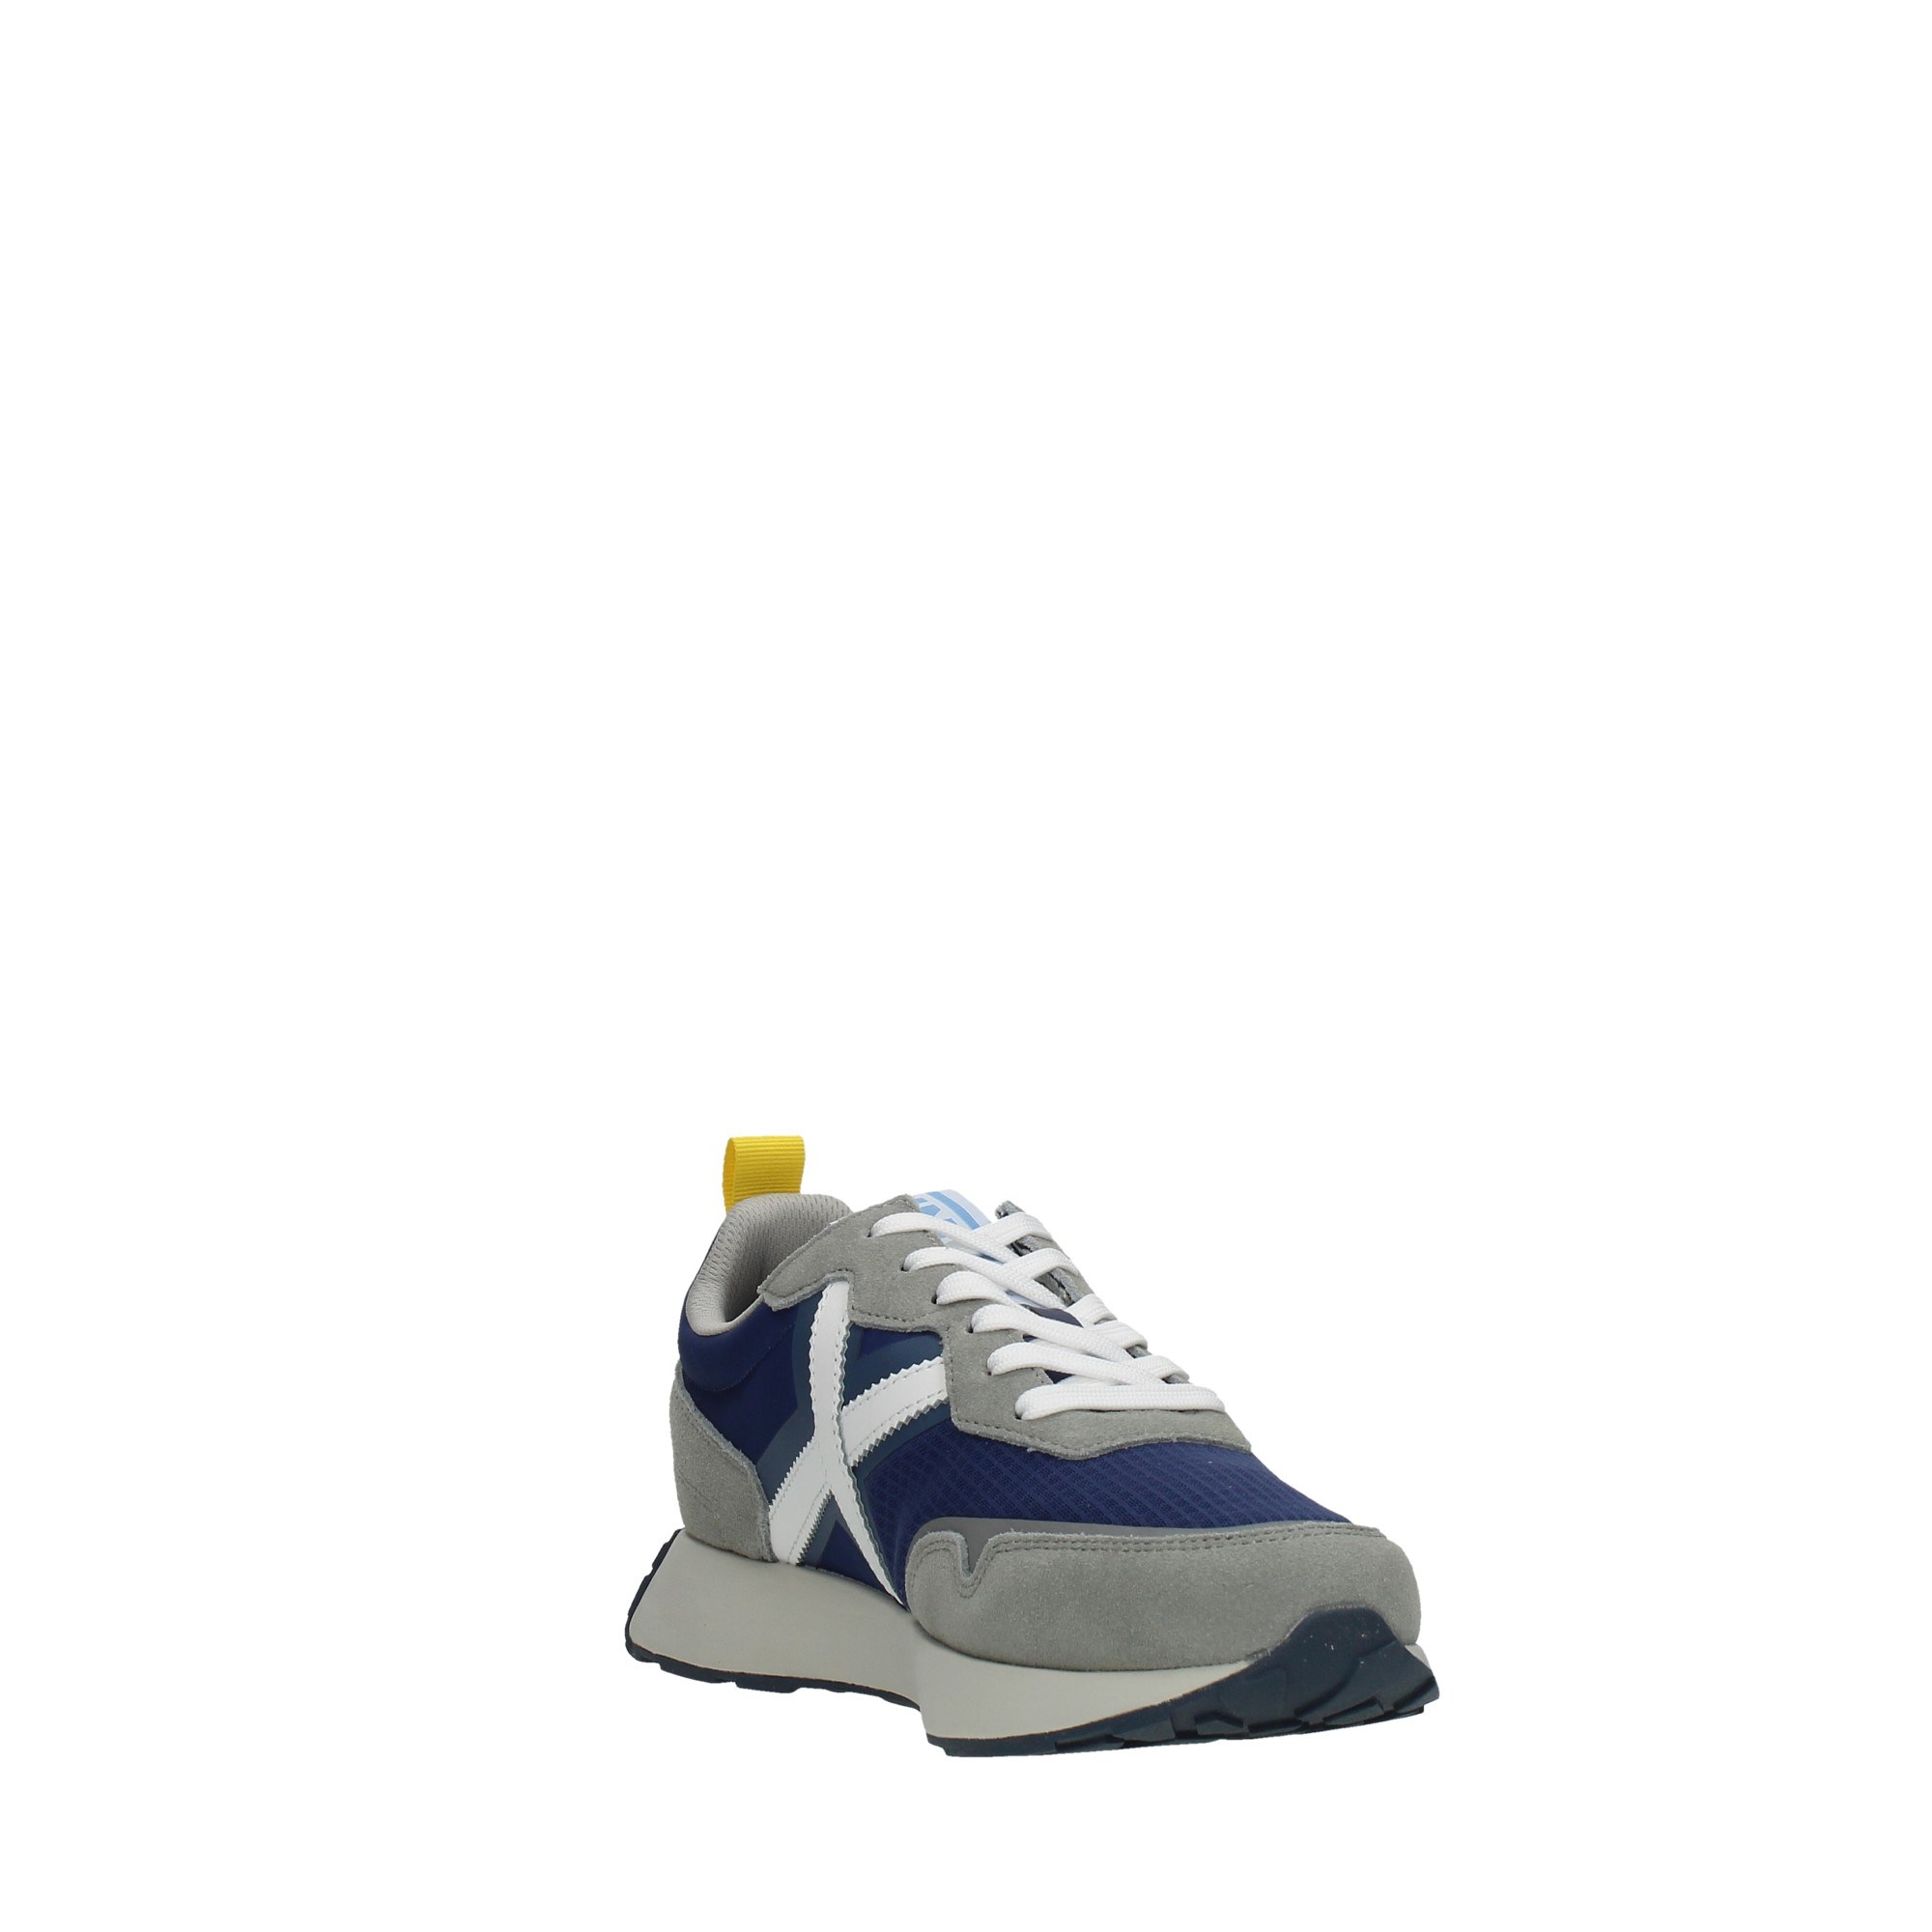 M U N I C H Scarpe Uomo Sneakers Blu XEMINE 55